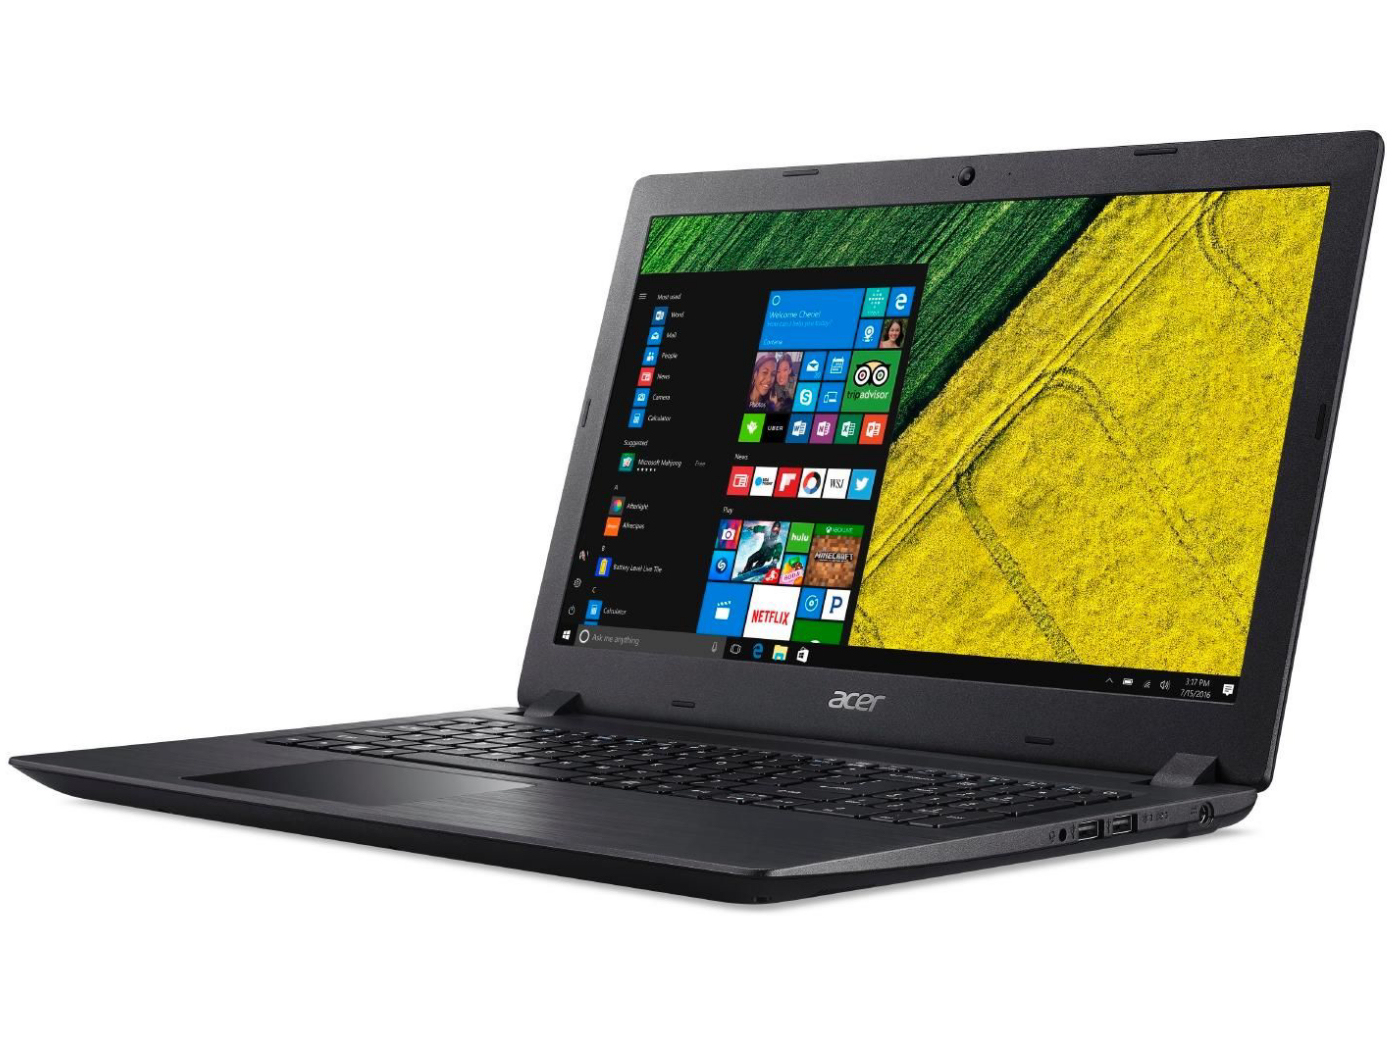 Acer Aspire 3 A315-21 (A6-9220, Radeon R4) Laptop Review -  NotebookCheck.net Reviews